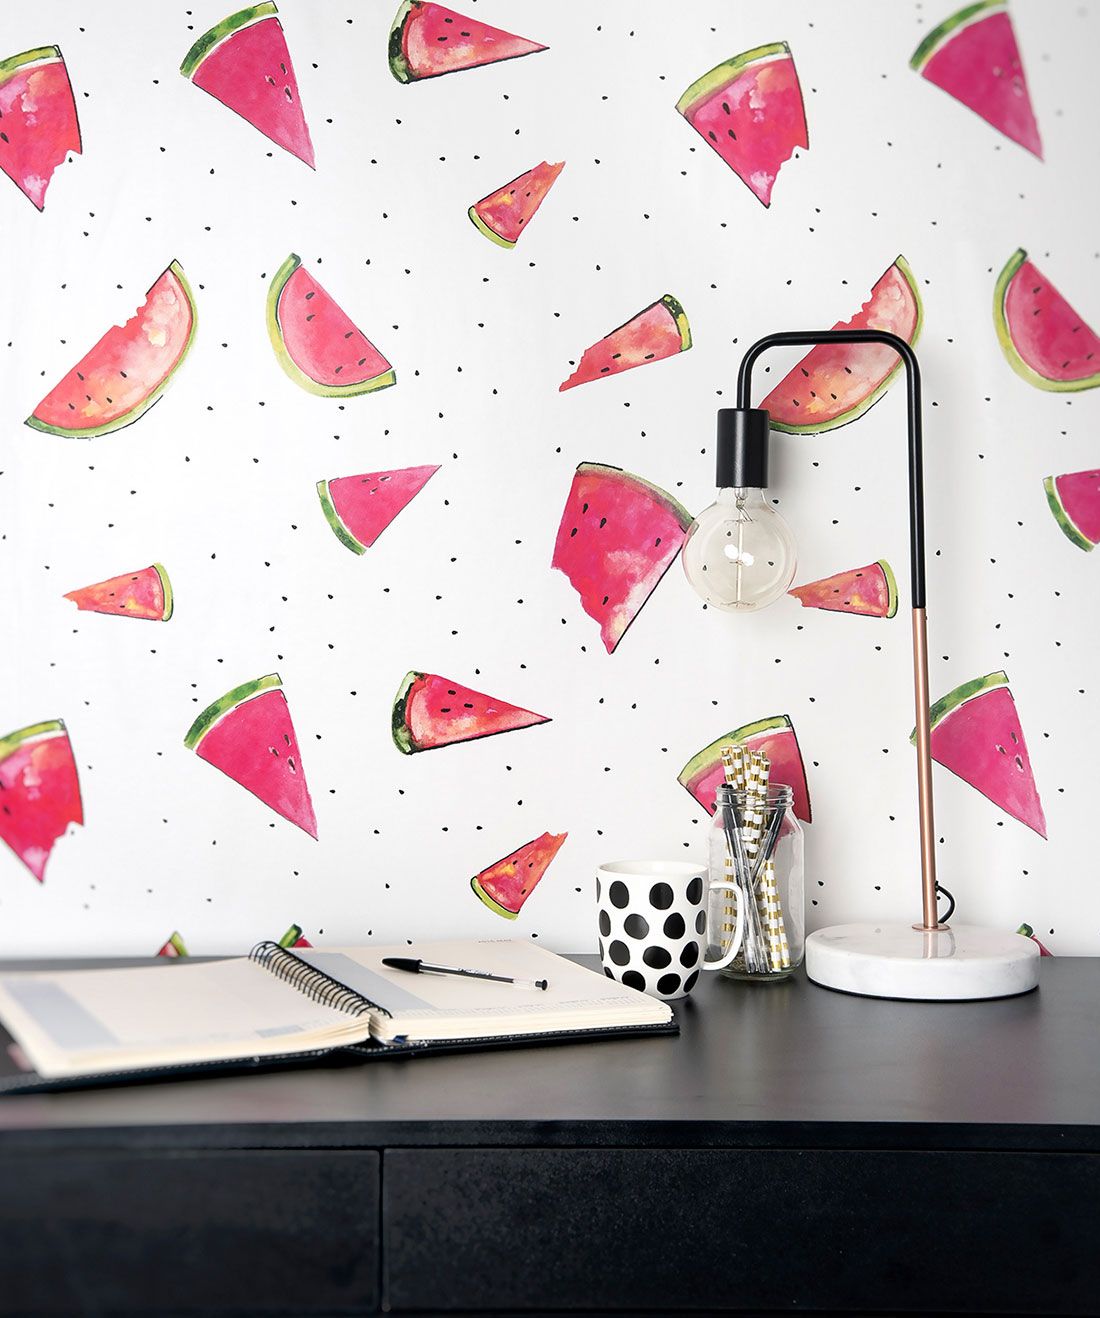 A Slice Watermelon Wallpaper